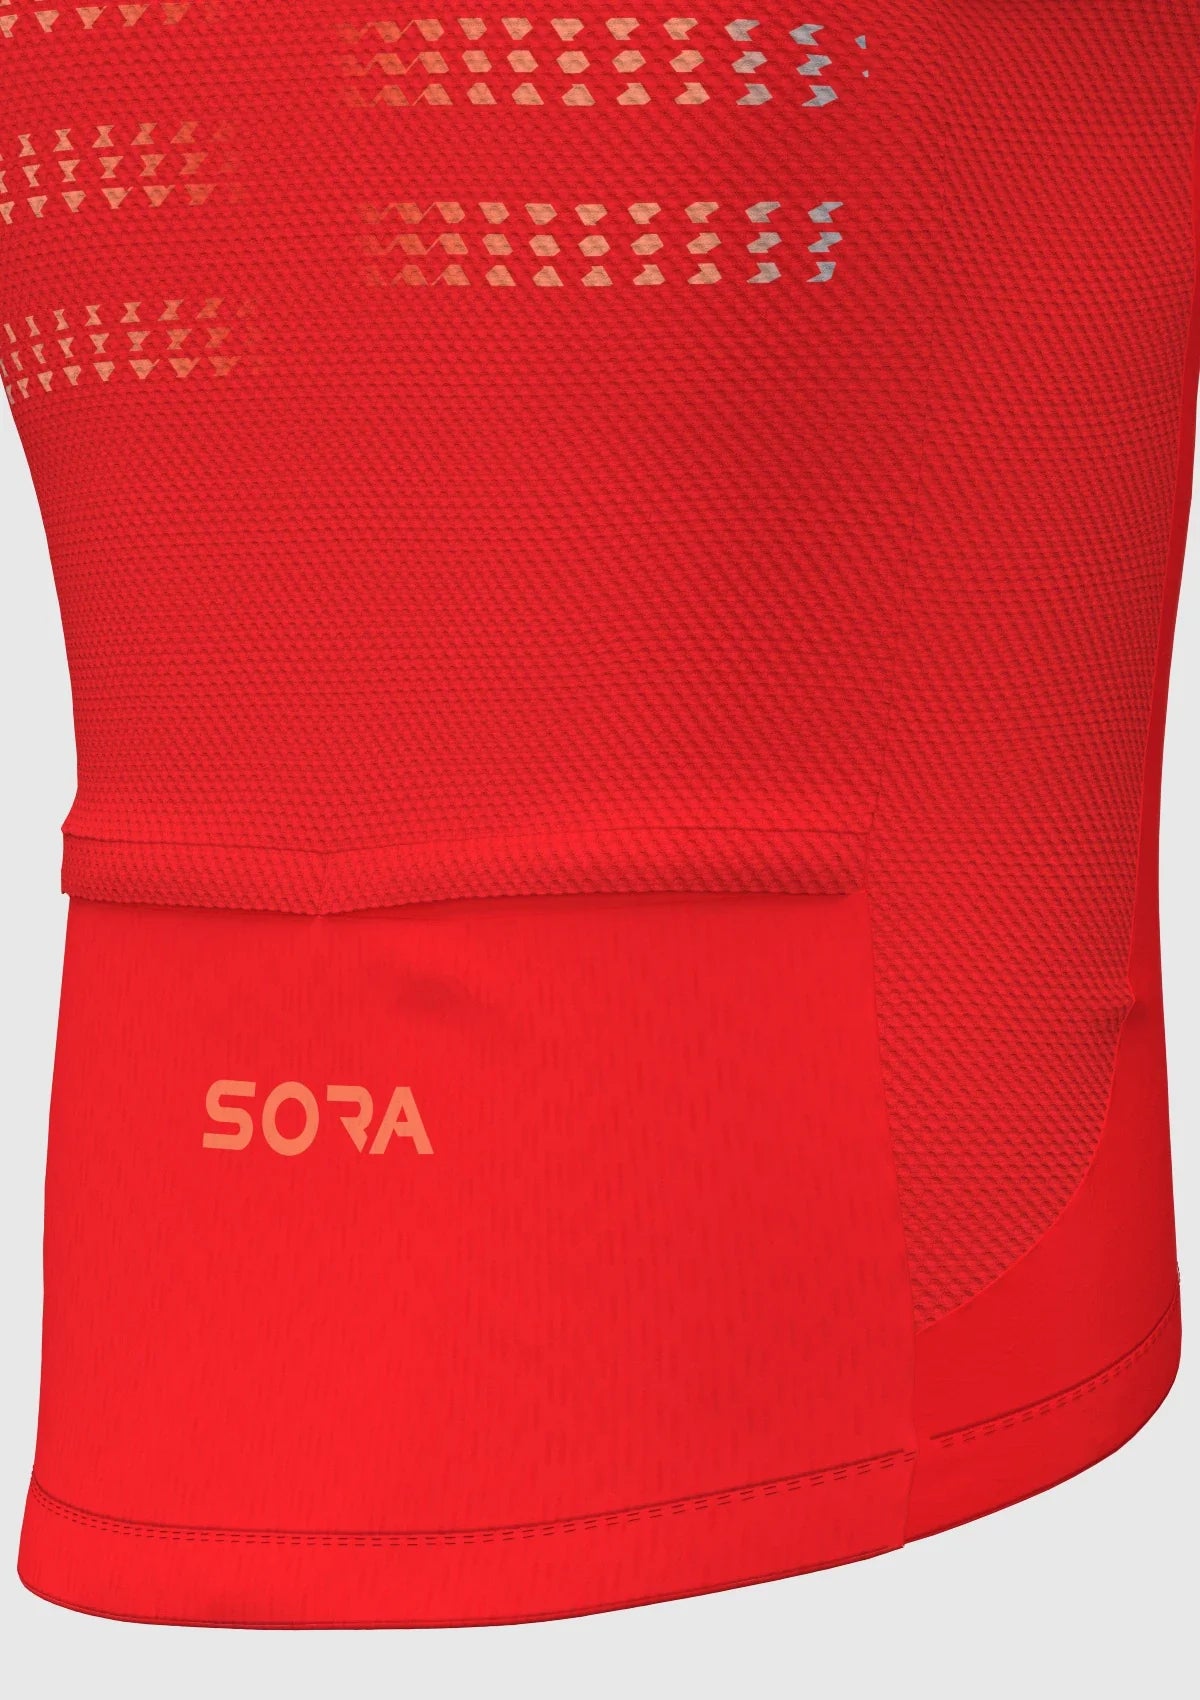 Ultra Light Red cycling vest